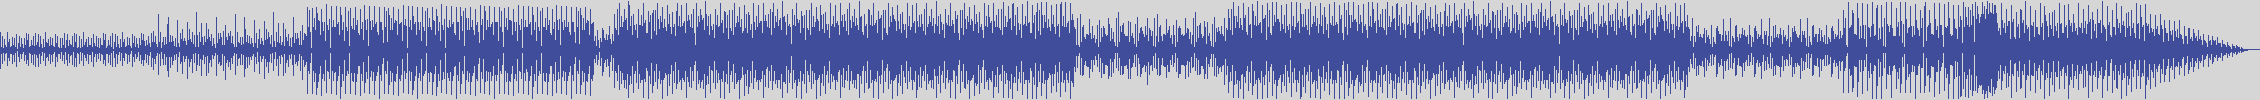 nf_boyz_records [NFY014] Dj Compact - Purple Eyes [Tribal Edit] audio wave form